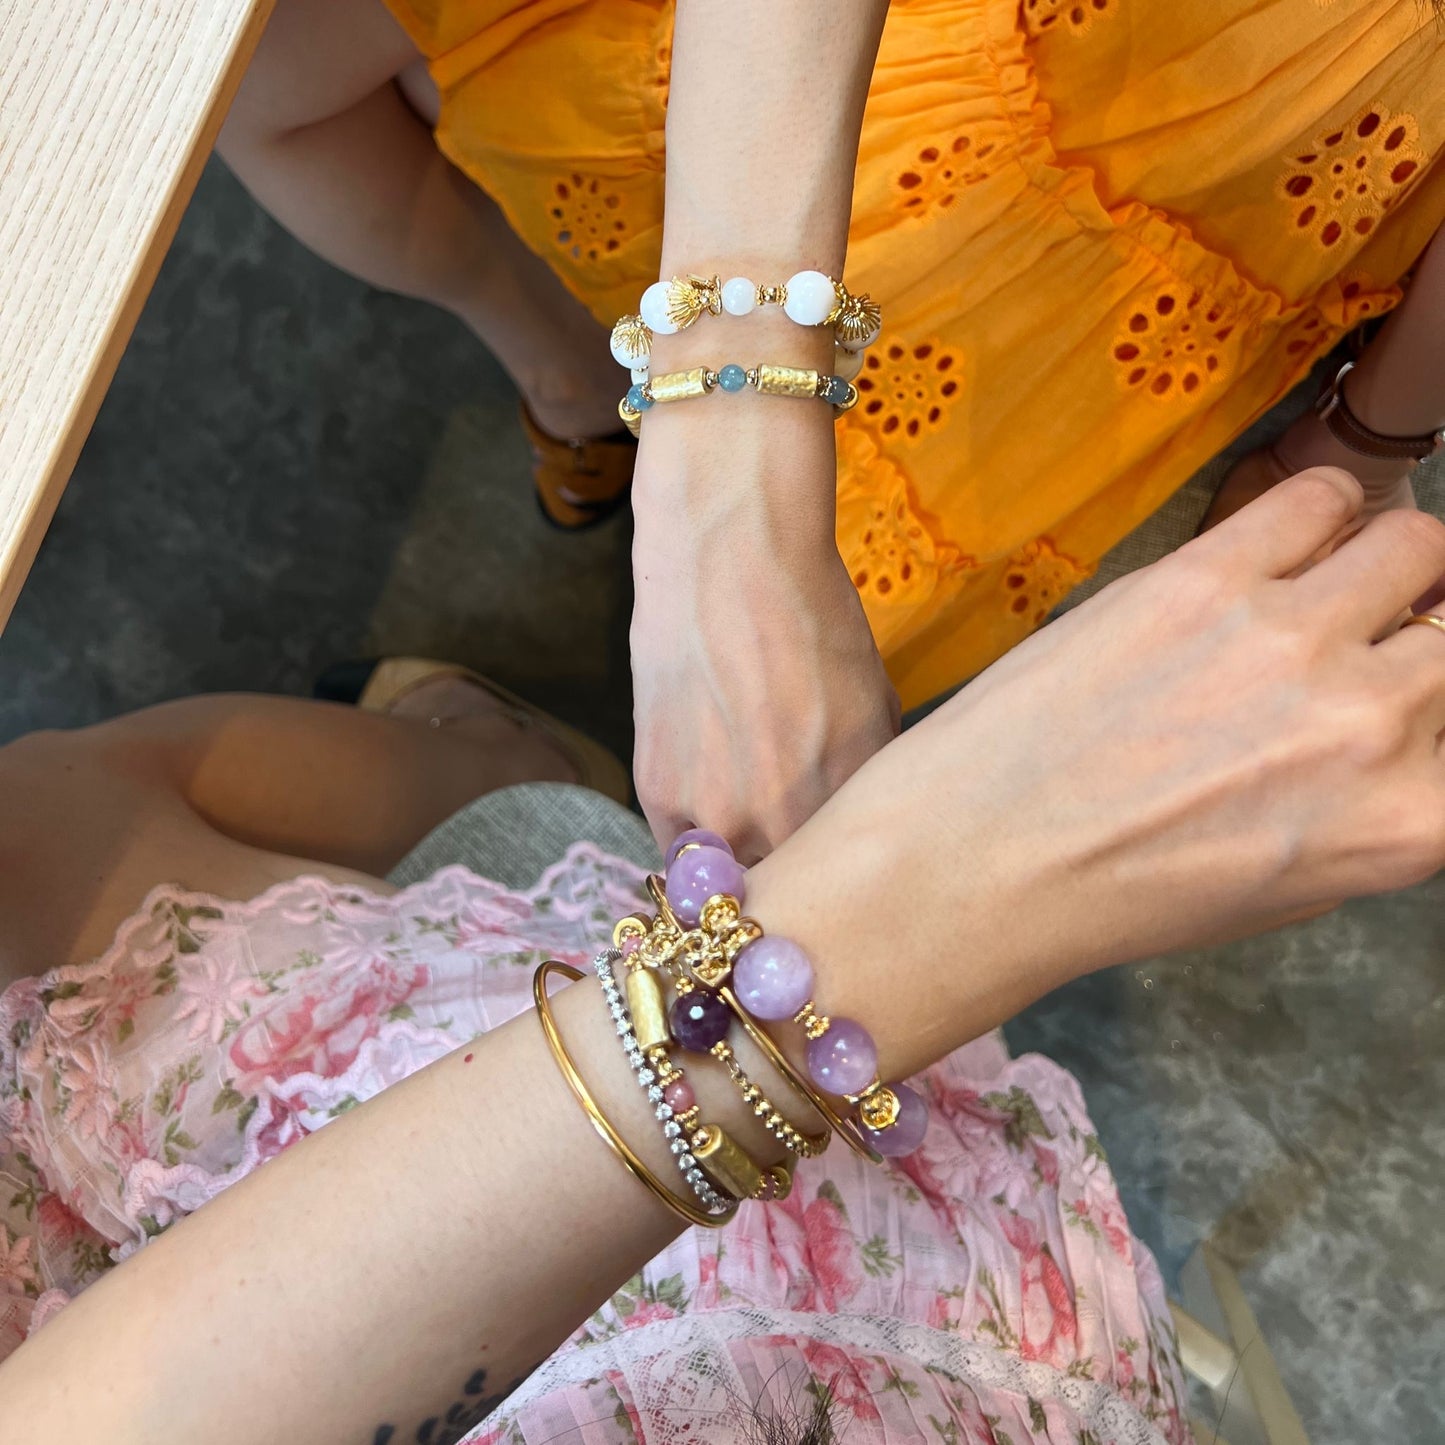 Lilac Kunzite Supreme Bracelet